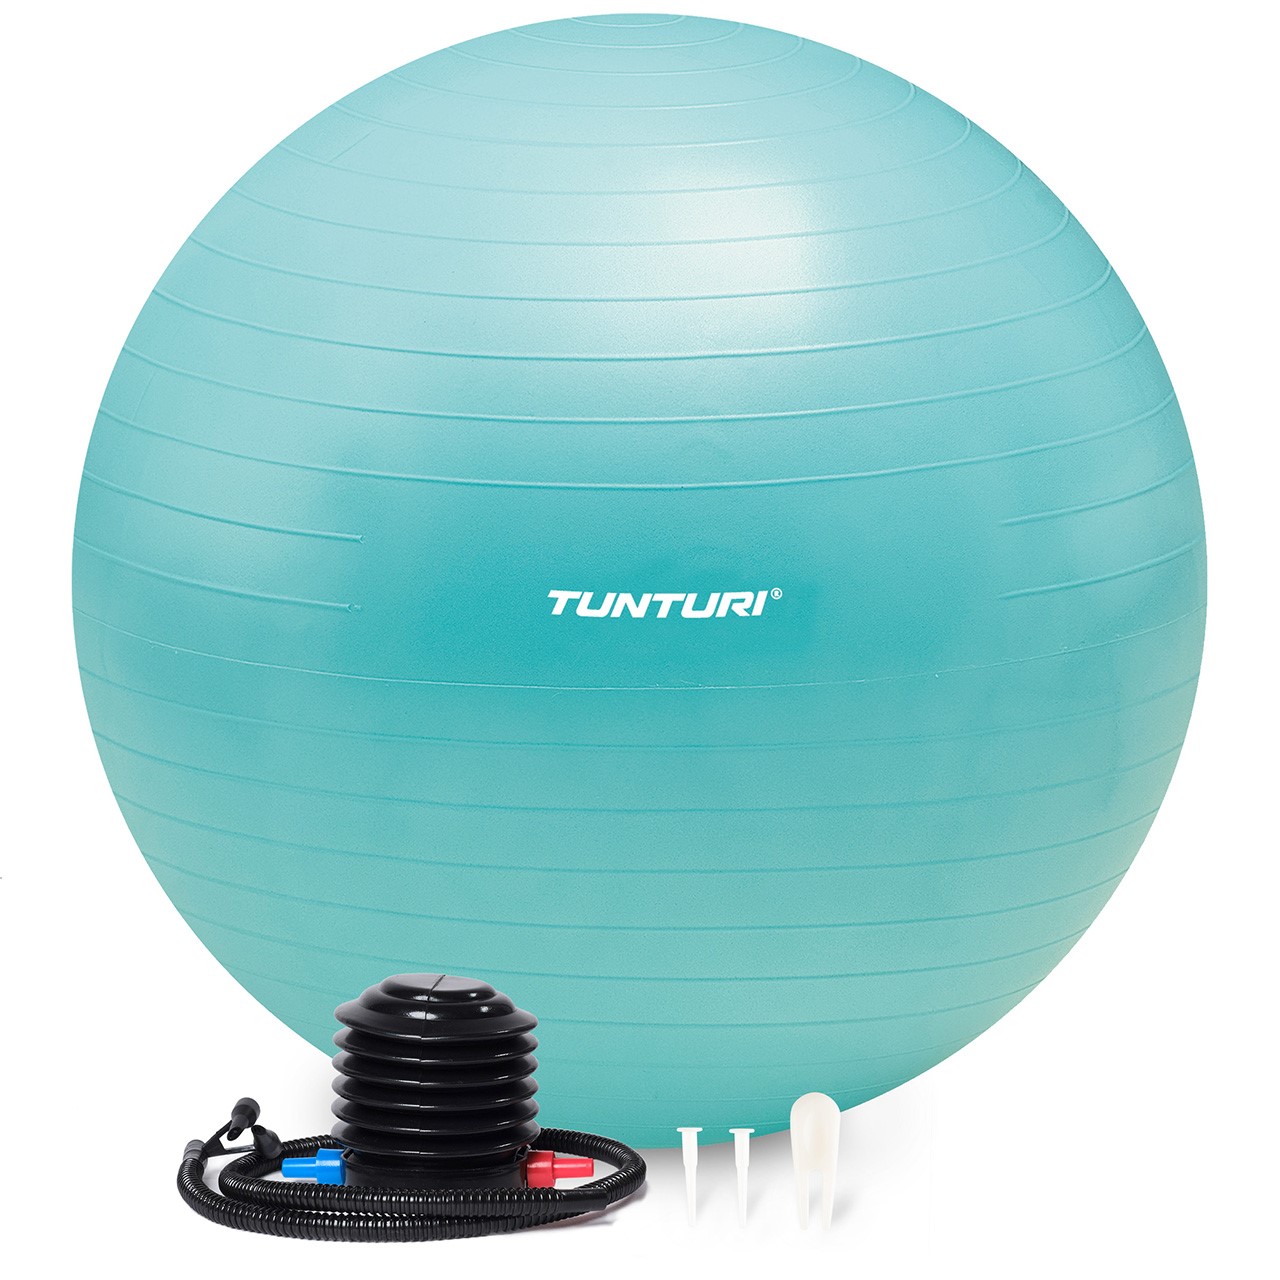 Tunturi Gym Ball - Fitnessball reissfest ABS 65 cm Türkis